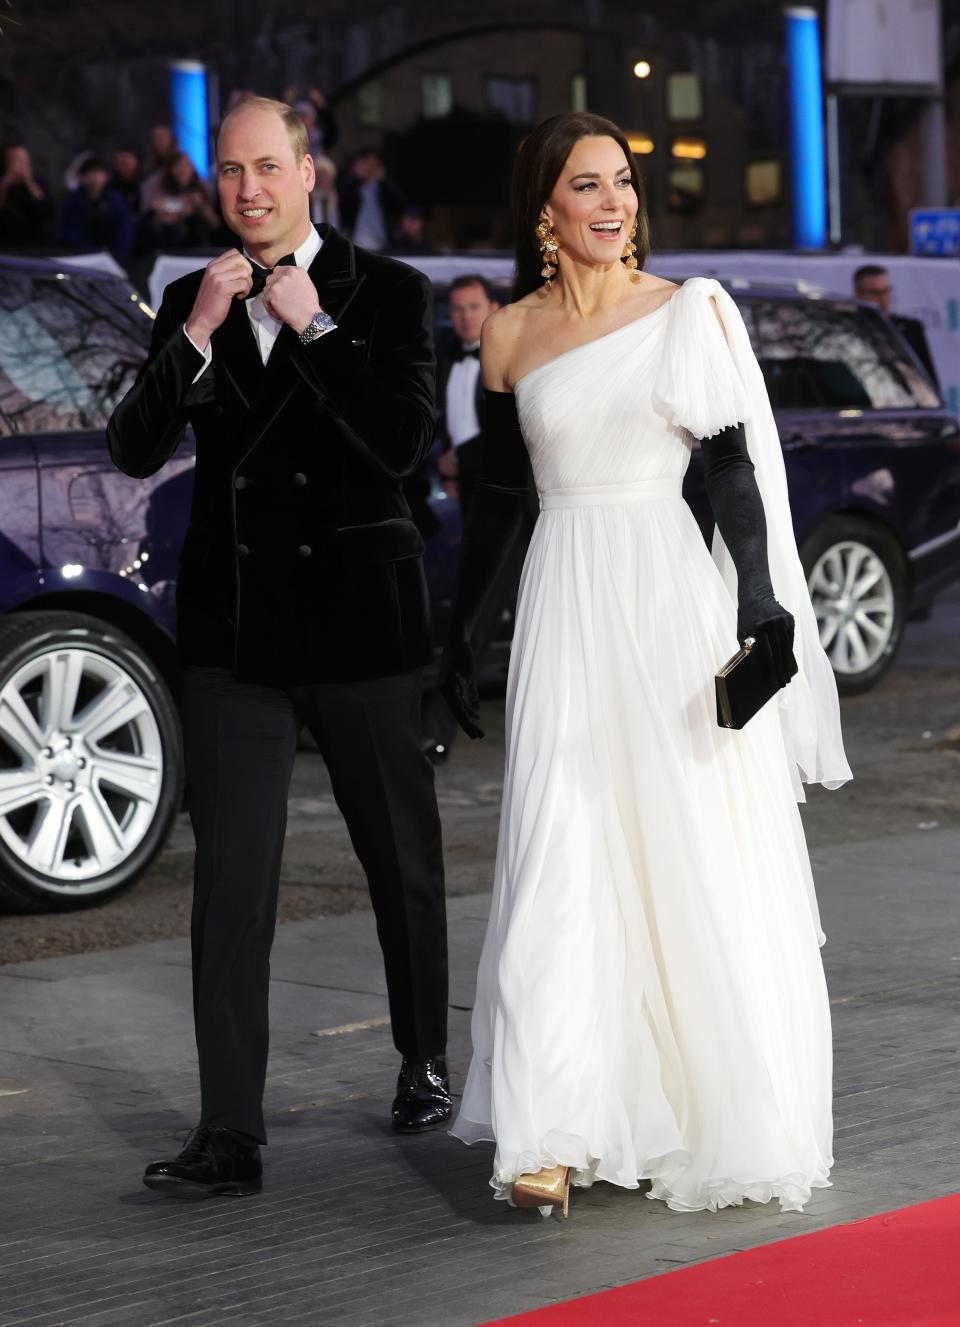 Kate Middleton Prince William arrive at London BAFTAs